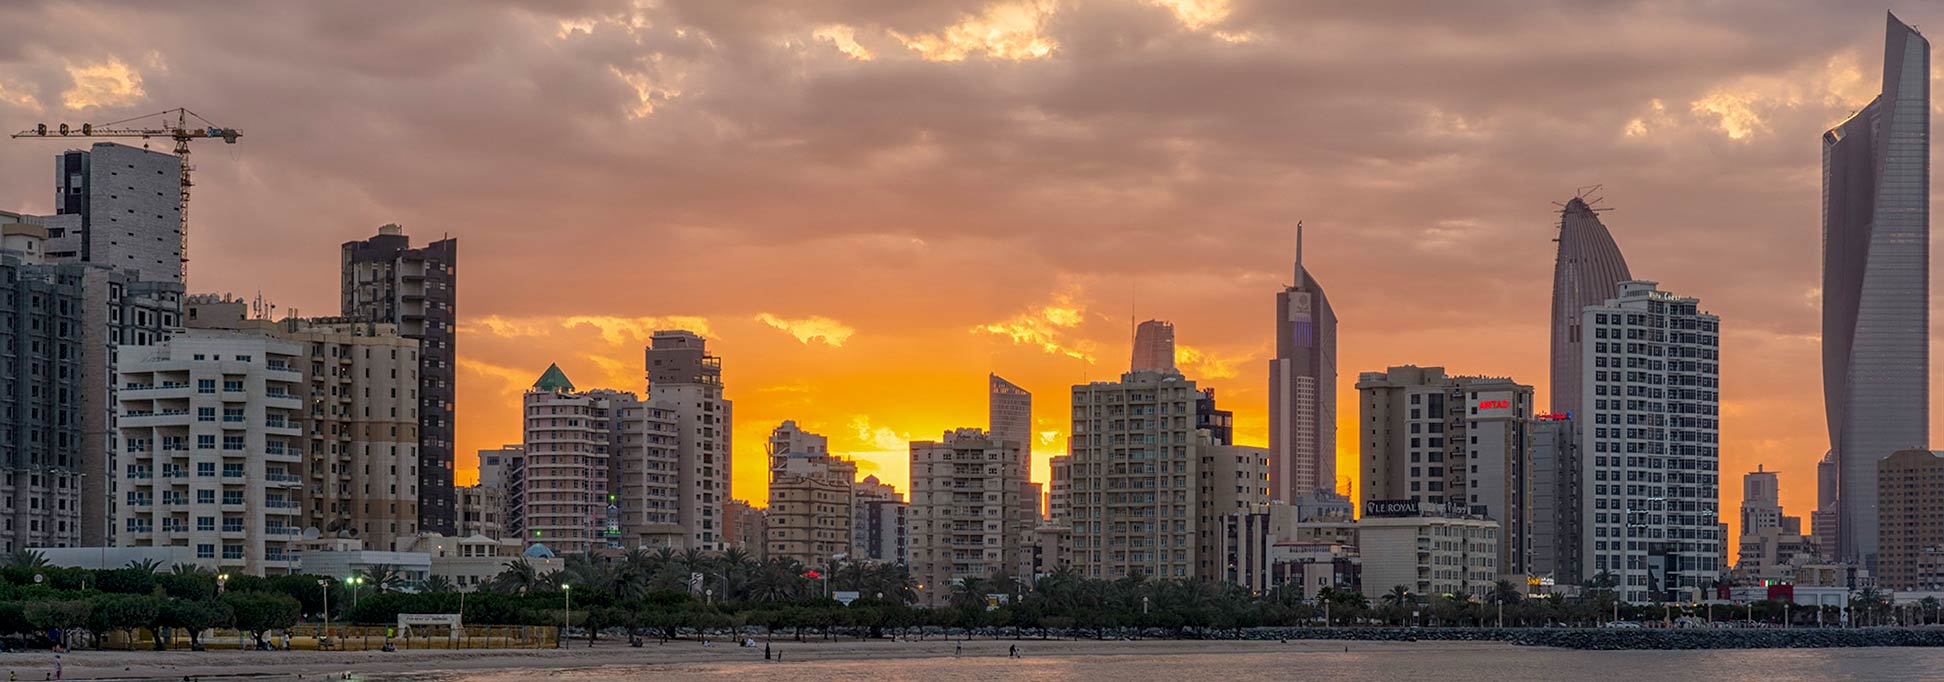 Skyline of Kuwait City at dawn.